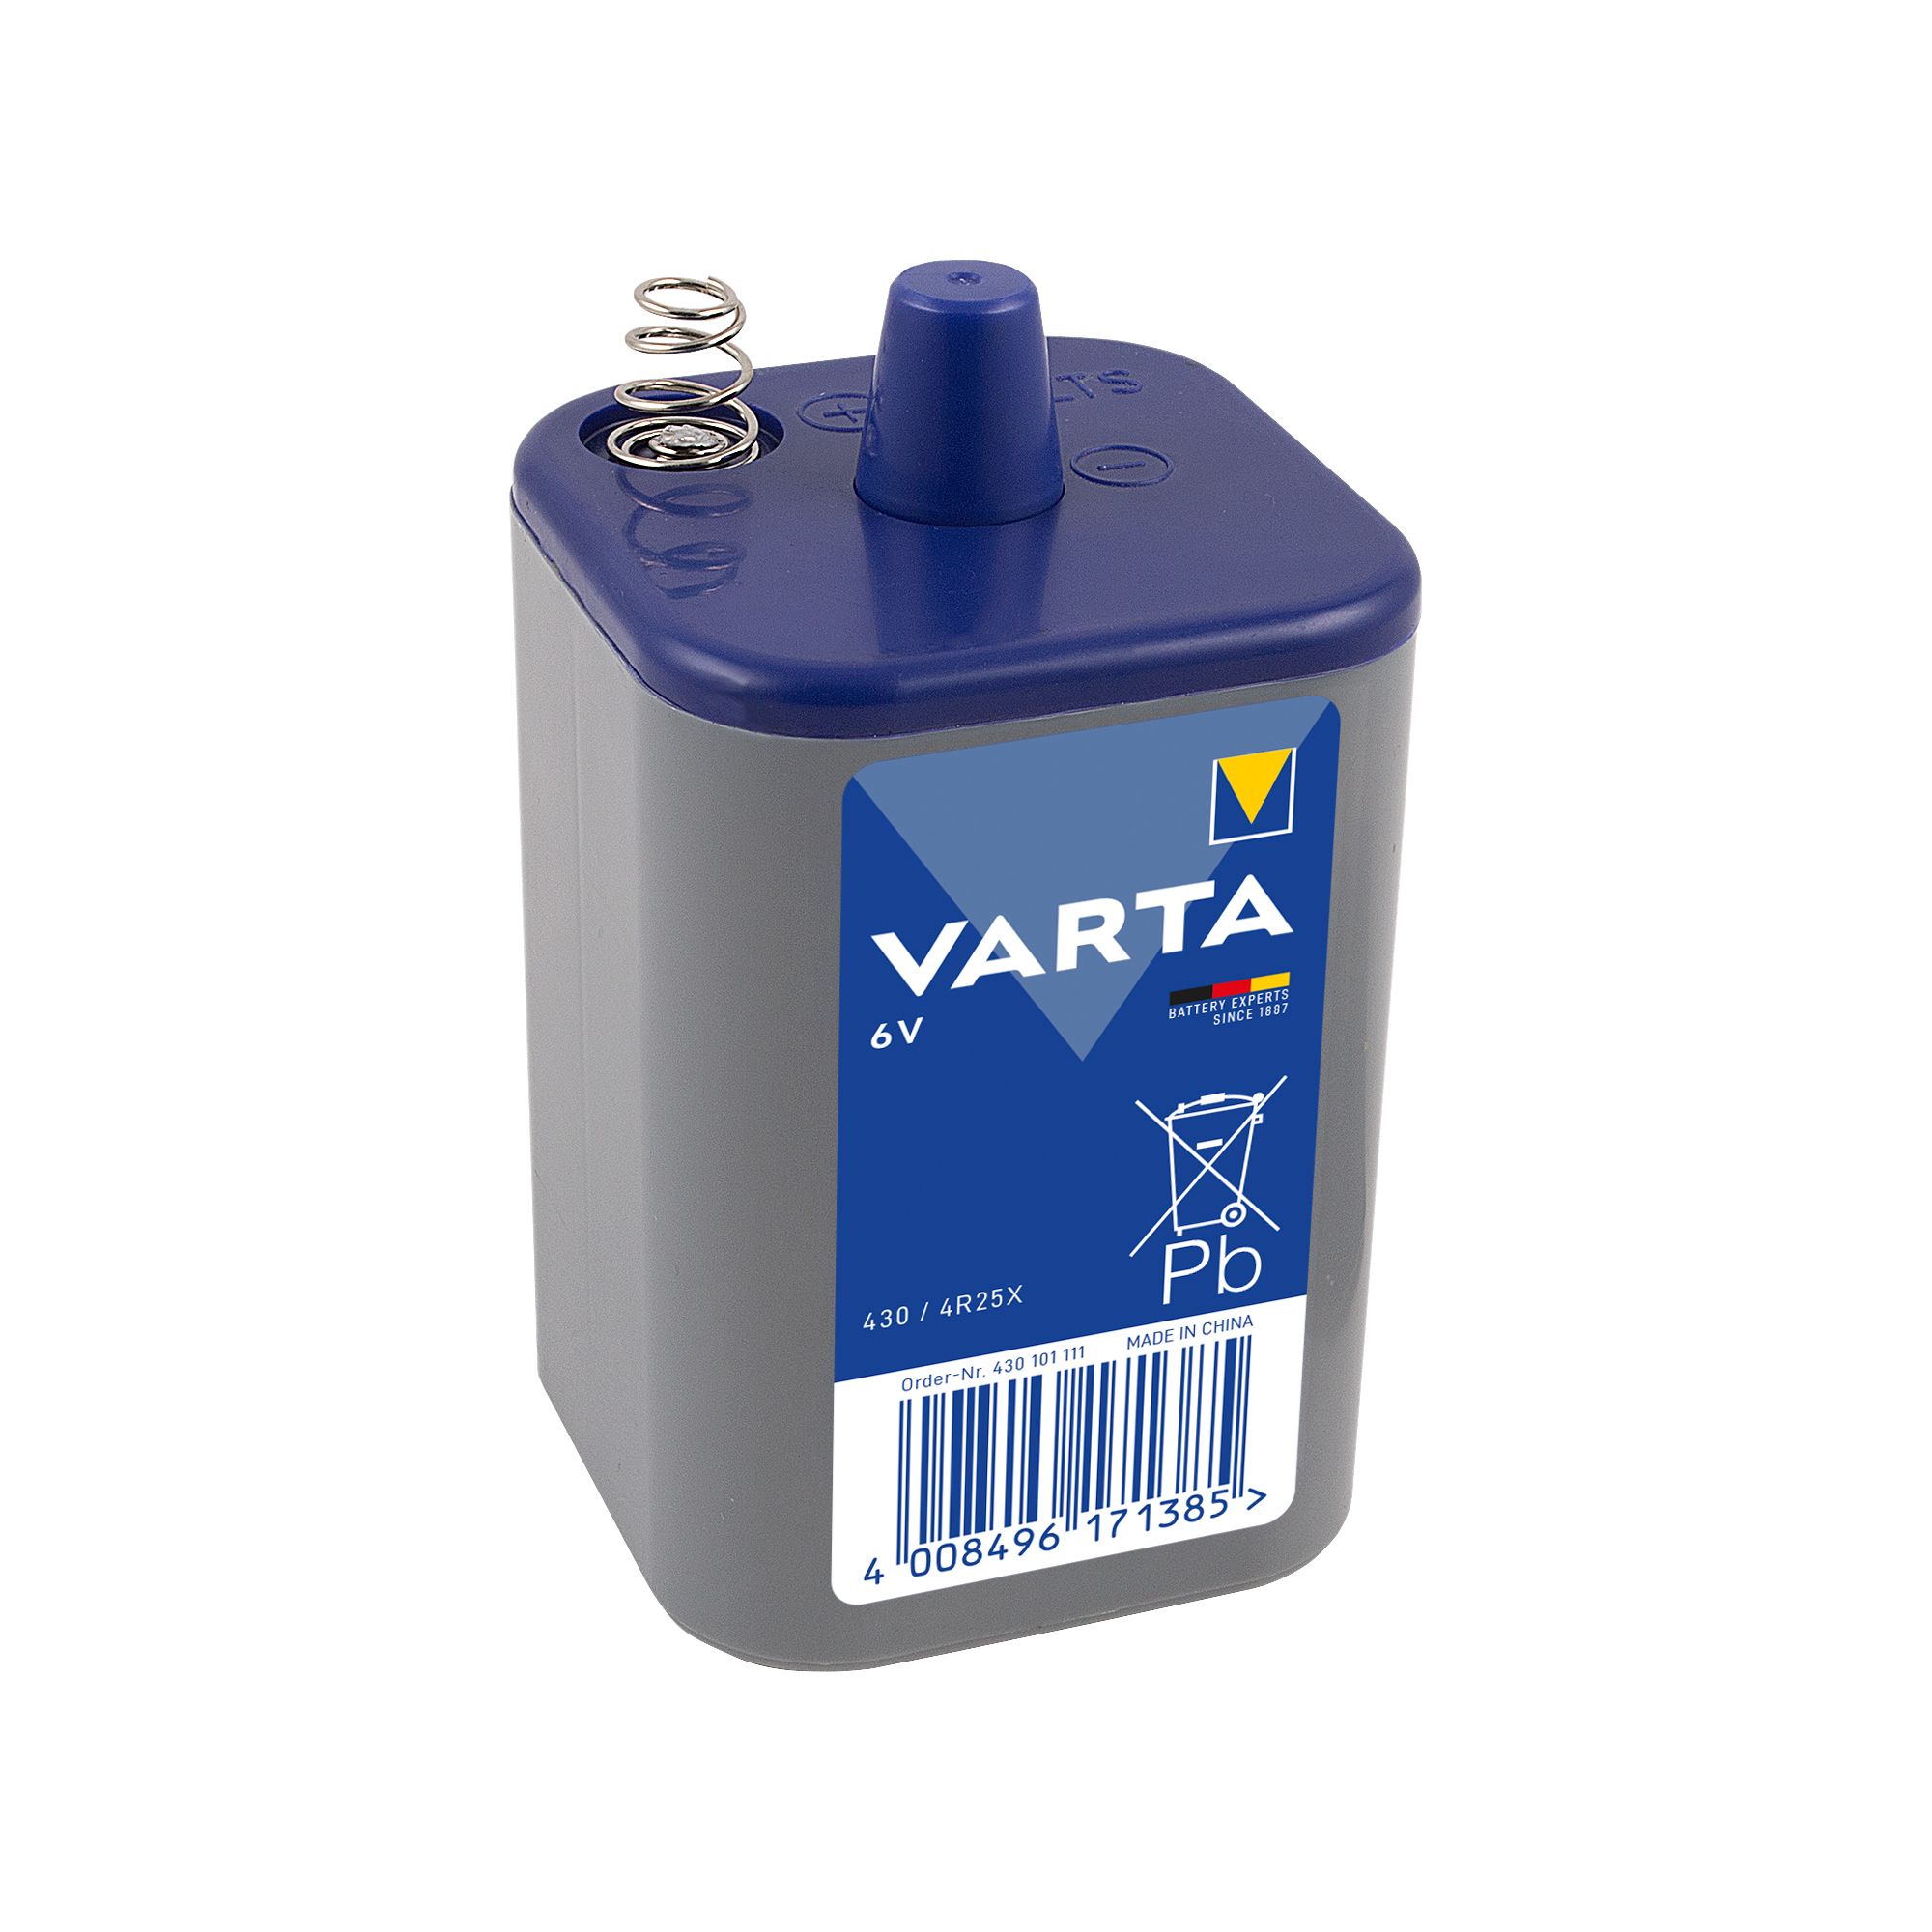 Varta Zinc carbon 6V Battery